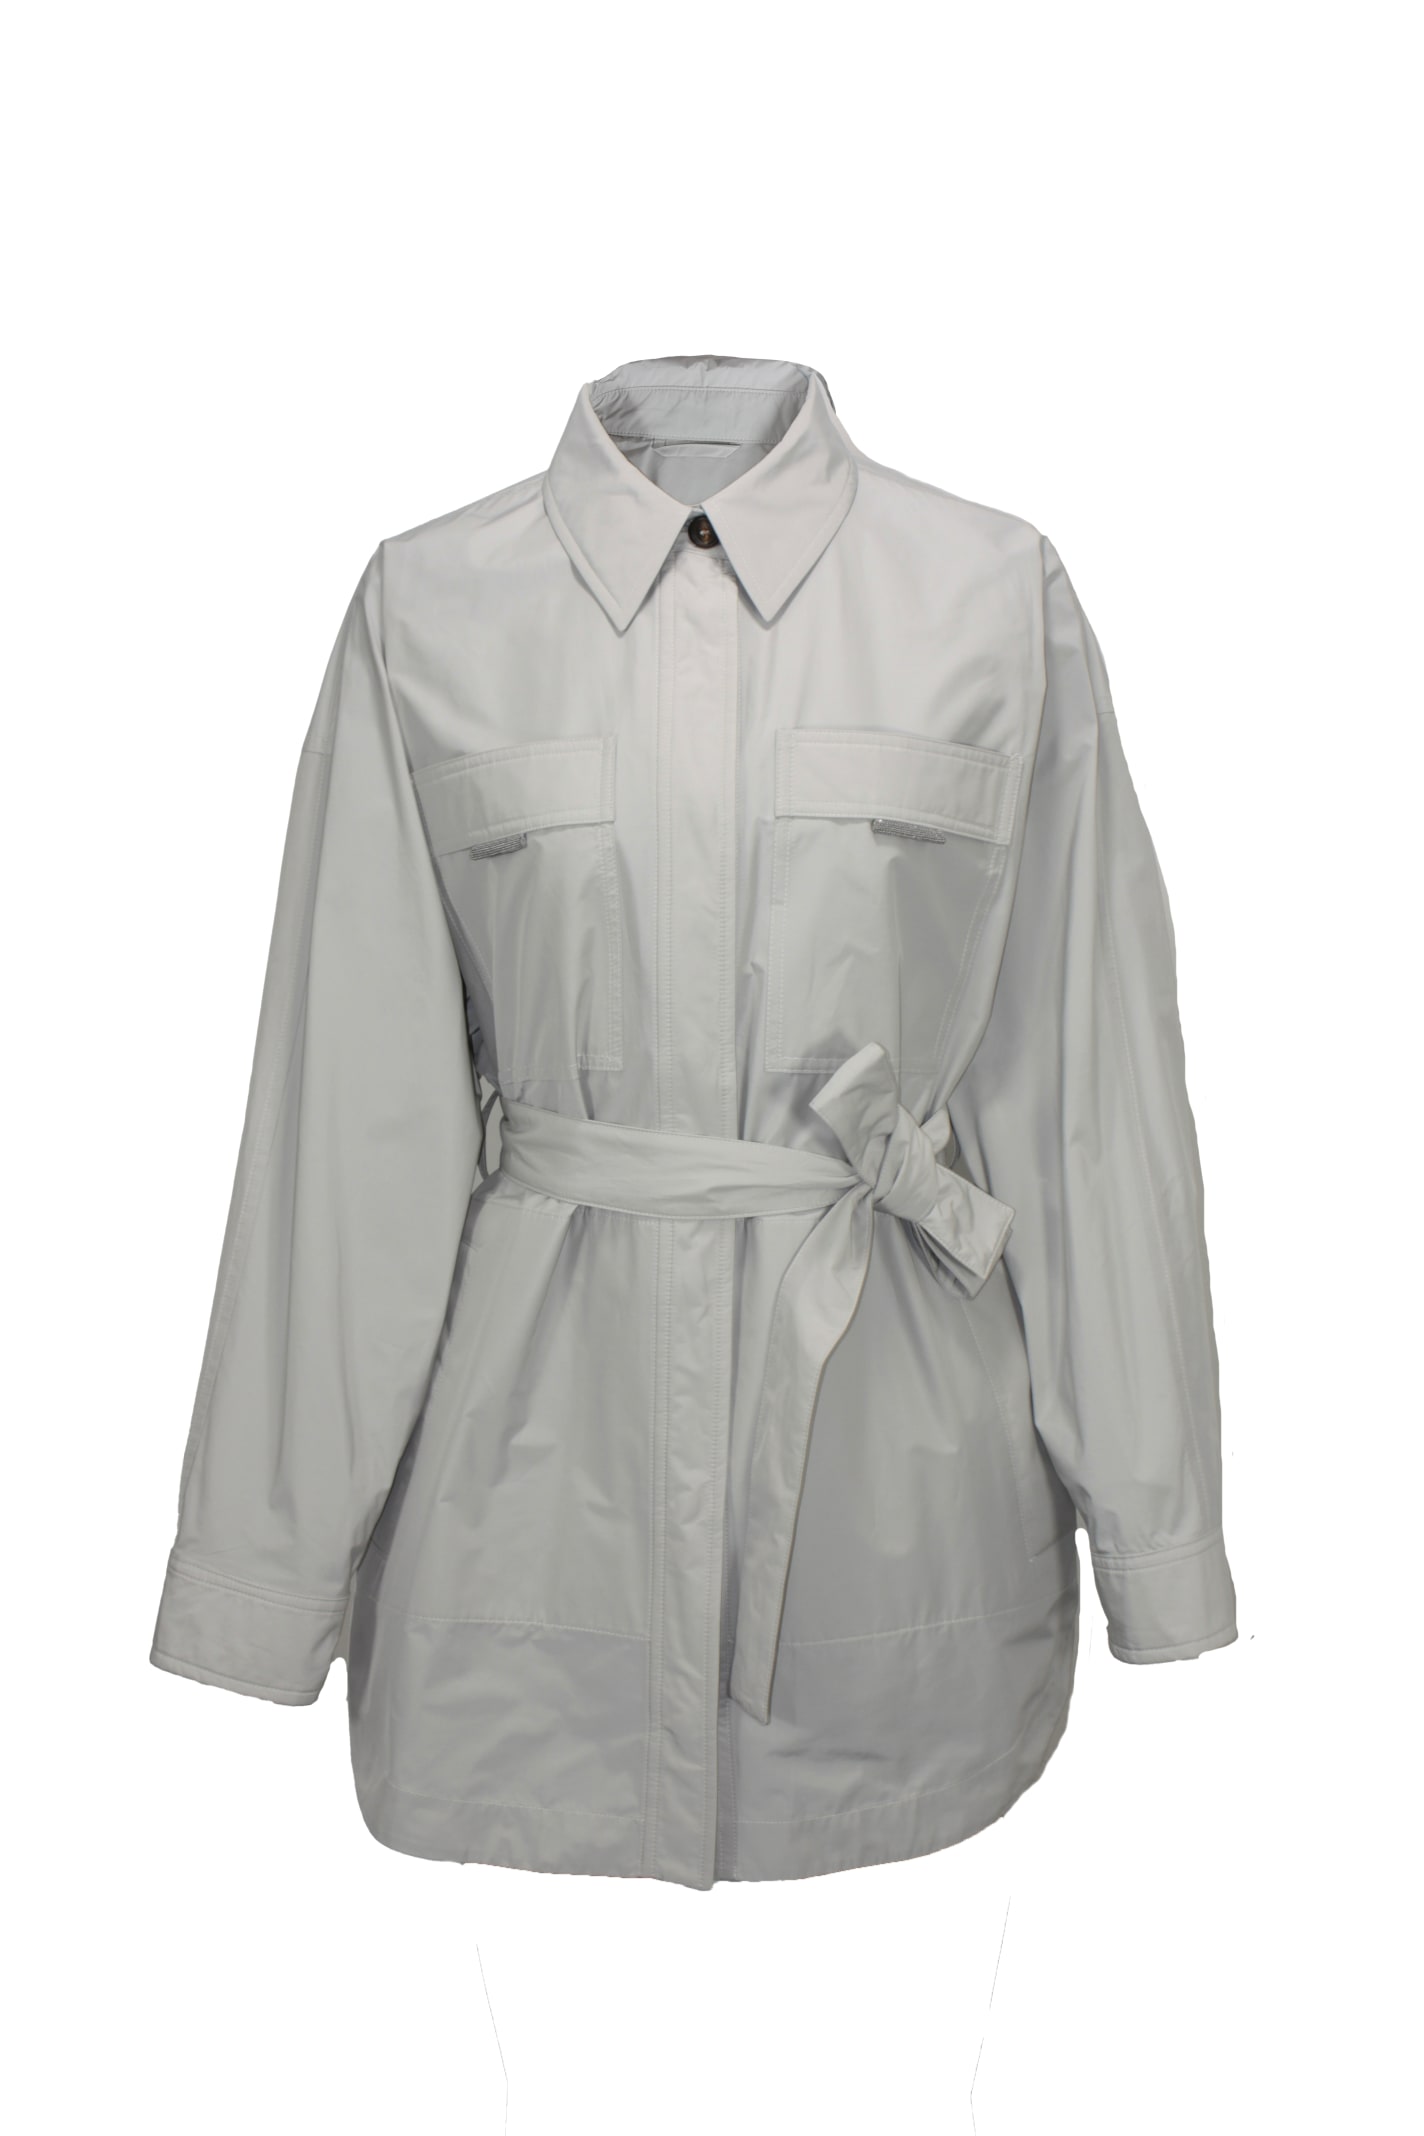 Brunello Cucinelli Long Sleeves Raincoat Jacket